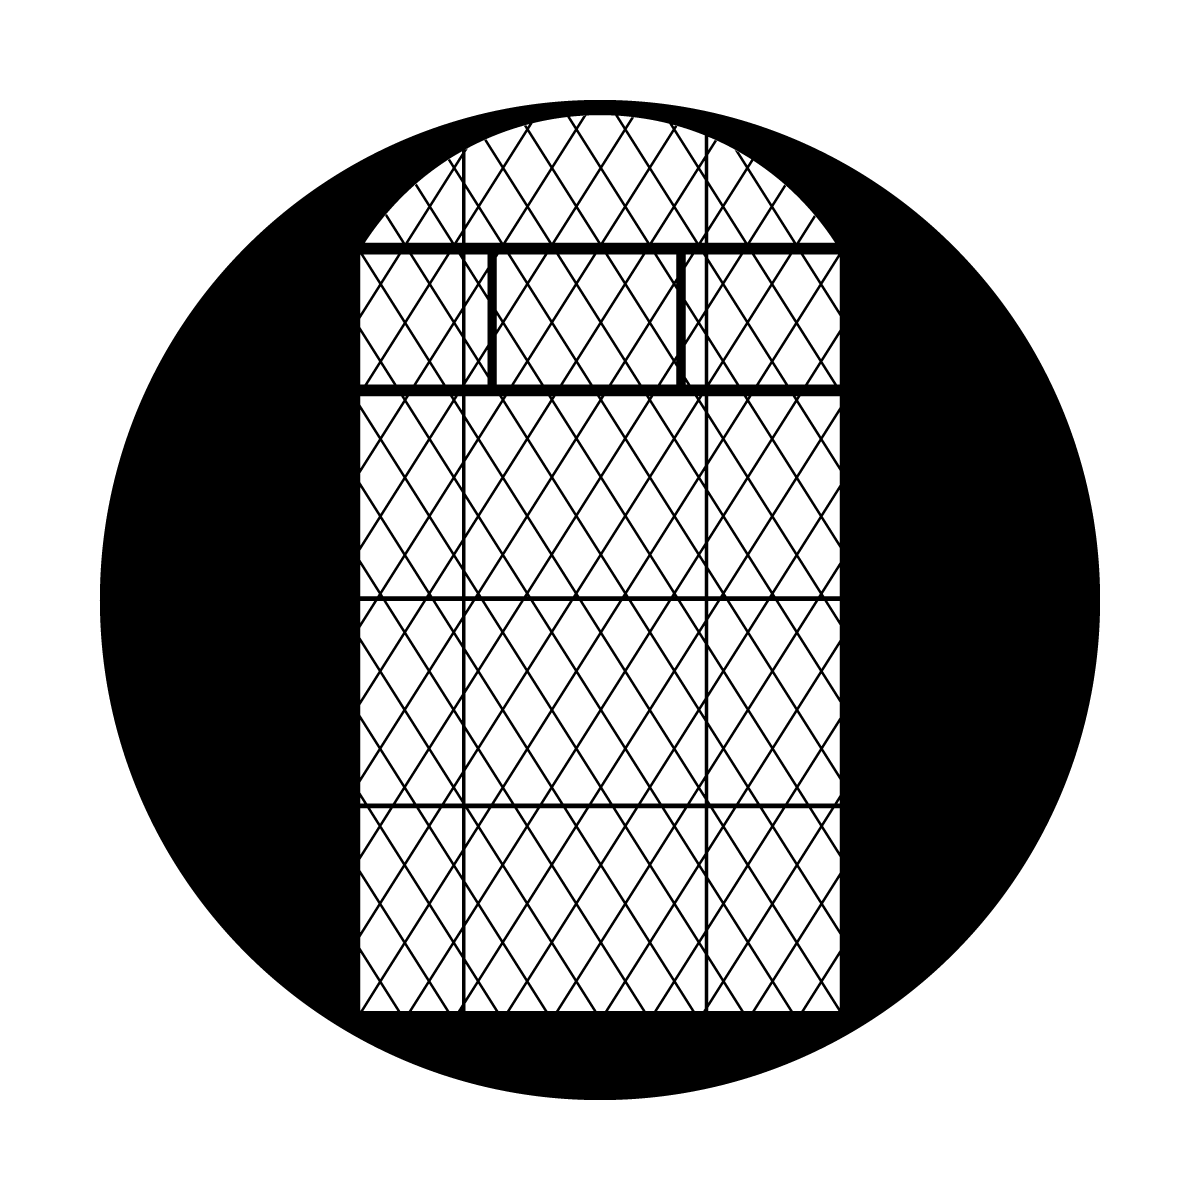 SRDS-8044 M. Skinner - Arched Lattice Window